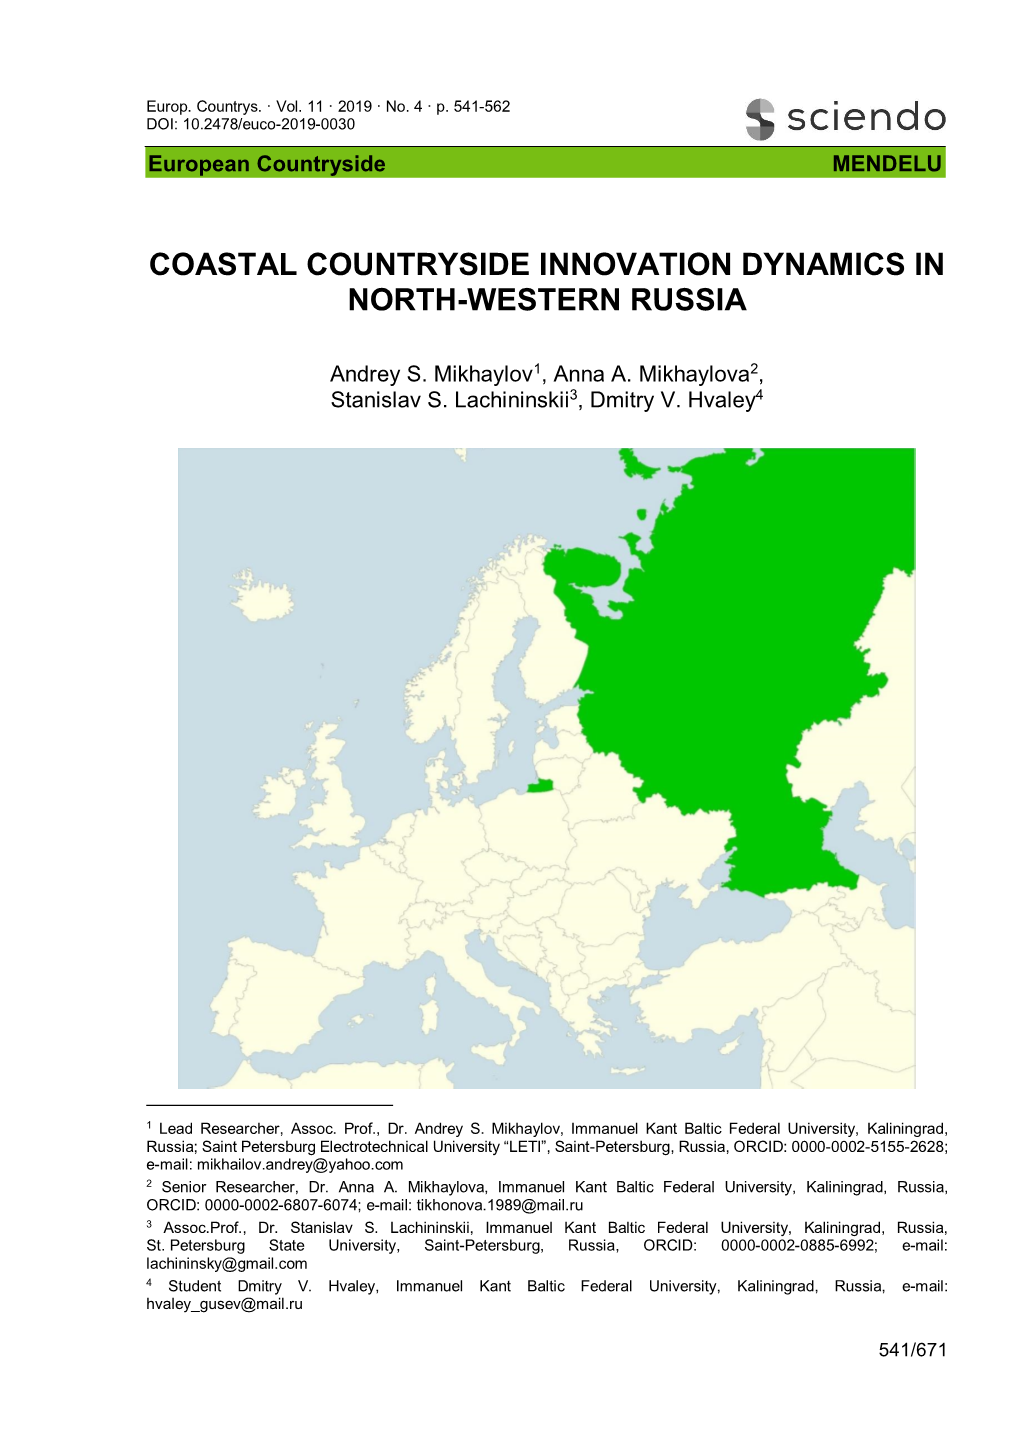 Coastal Countryside Innovation Dynamics in North-Western Russia